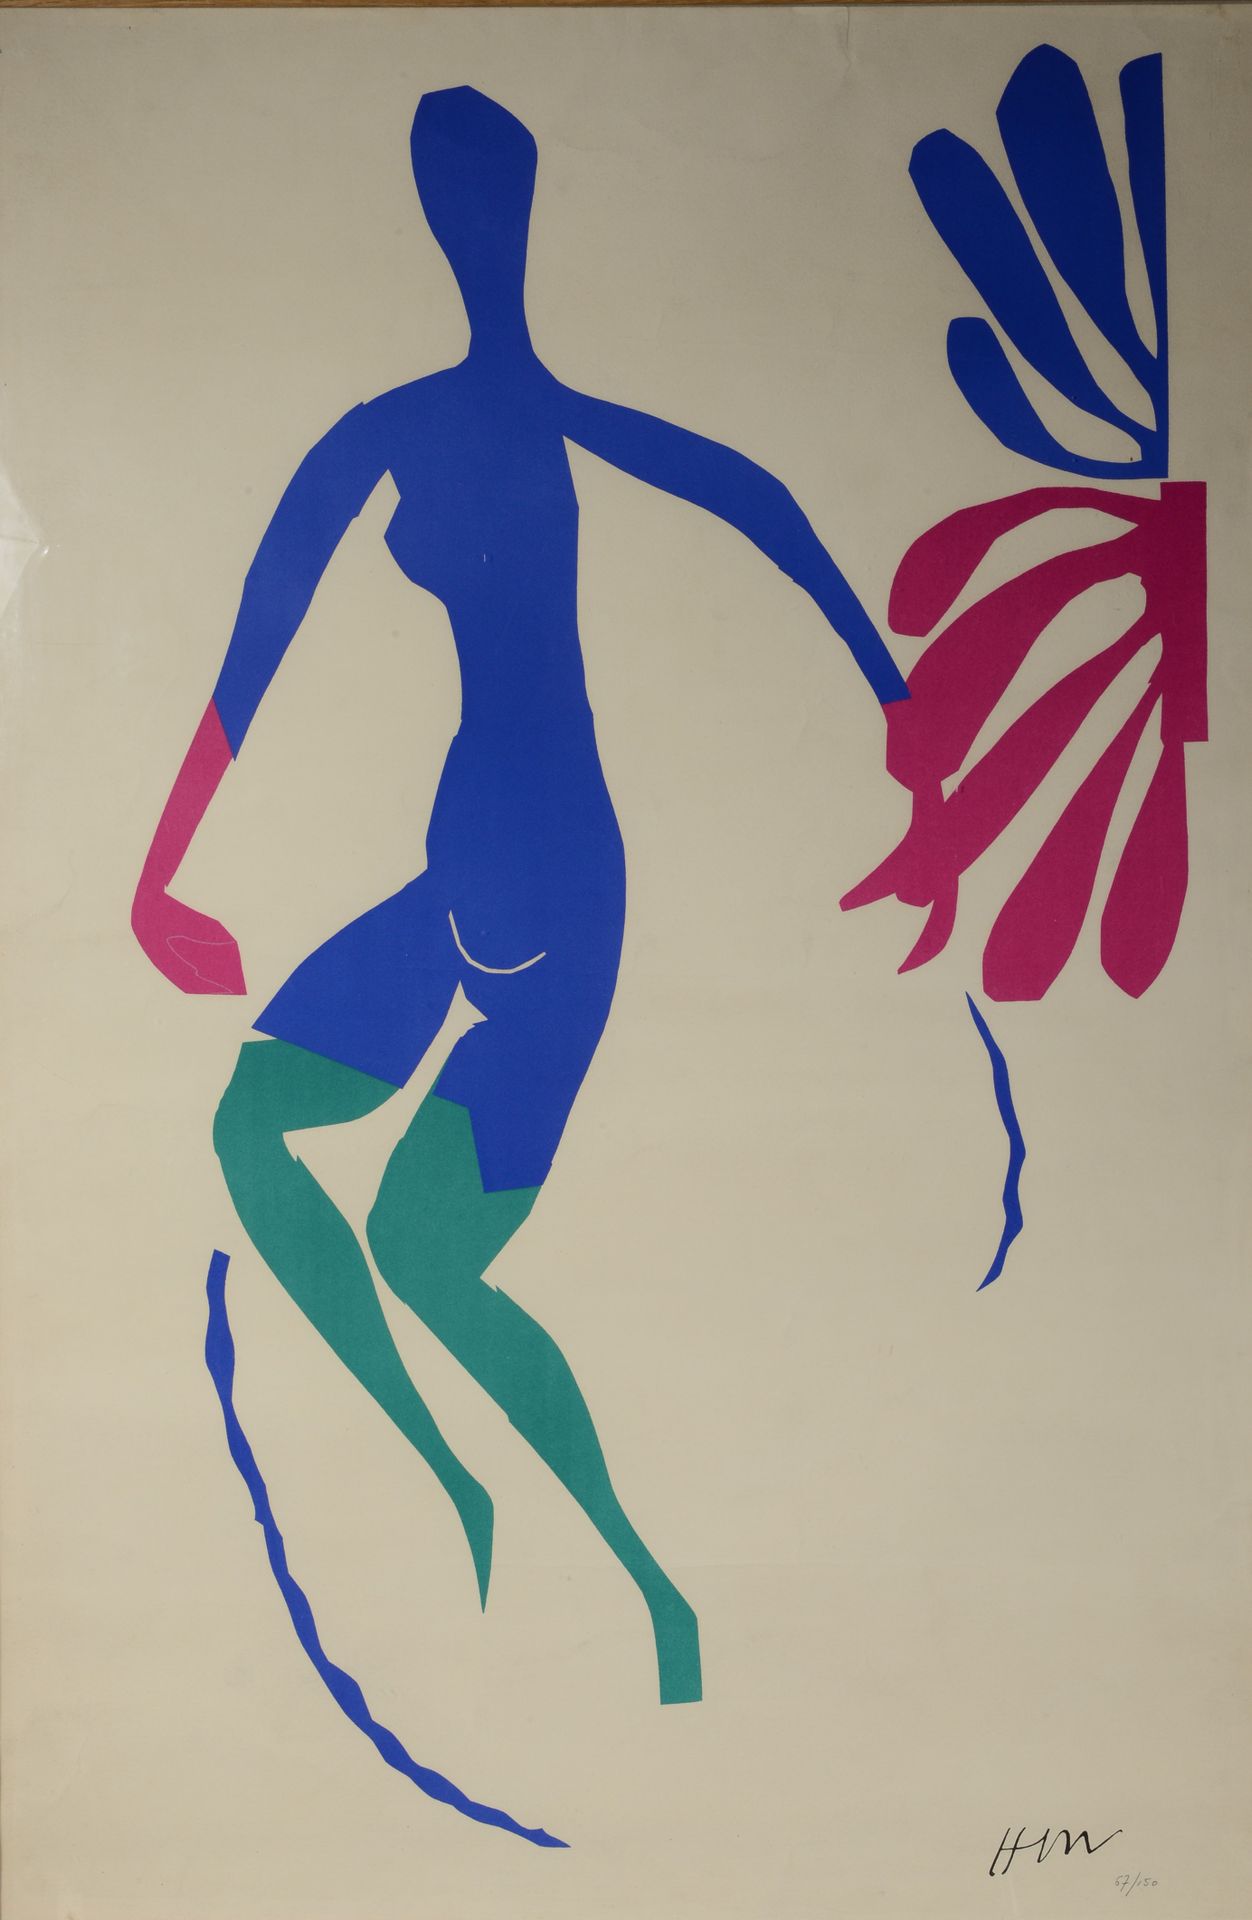 Null (后）亨利-马蒂斯（1869-1954）《蓝色女人和绿色长袜》。平版印刷海报。在板块中签署了首字母，编号为67/150。101厘米 x 67厘米